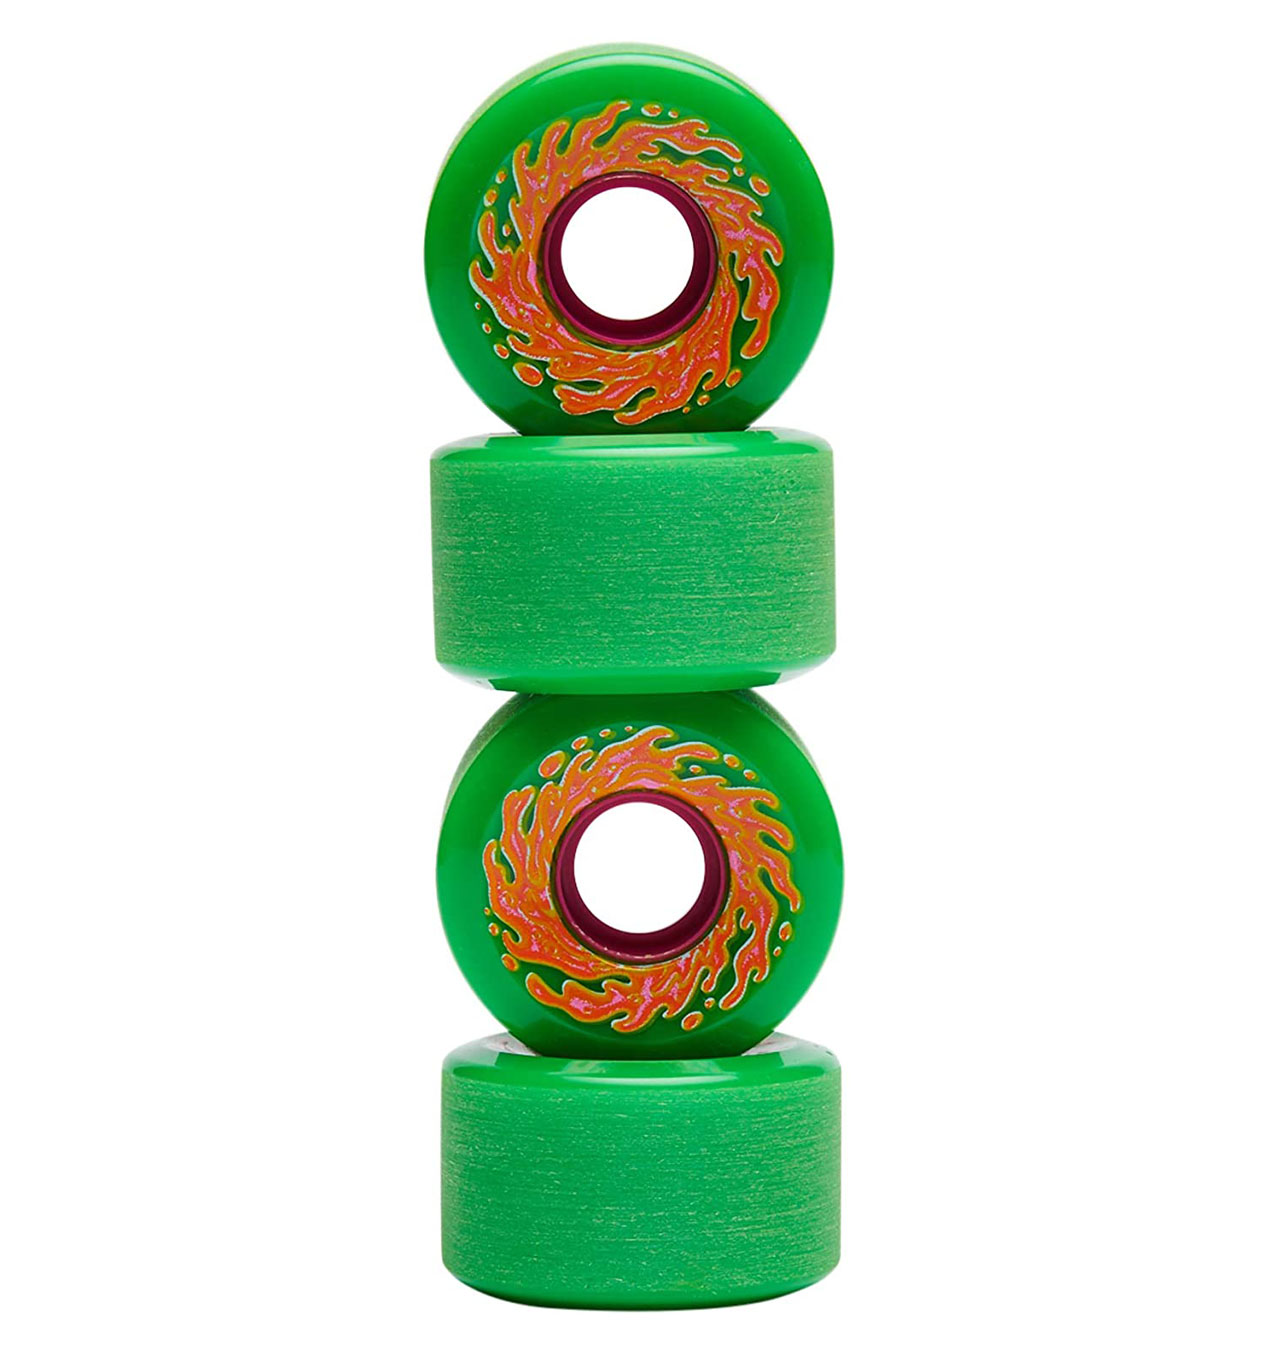 Santa Cruz - Slime Balls Mini OG Skateboard Wheels 78a - 54.5mm